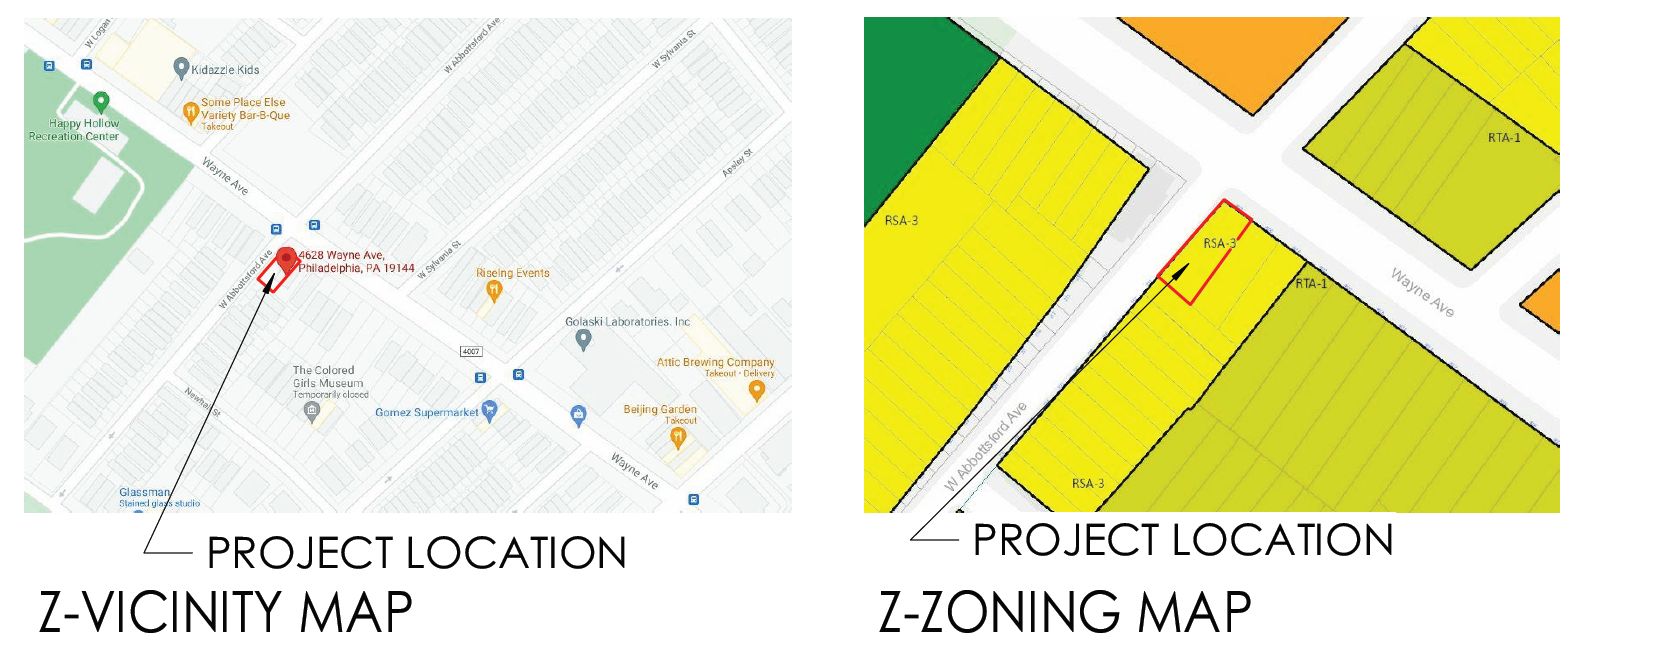 4628 Wayne Avenue. Site map and zoning map. Credit: Designblendz via the City of Philadelphia